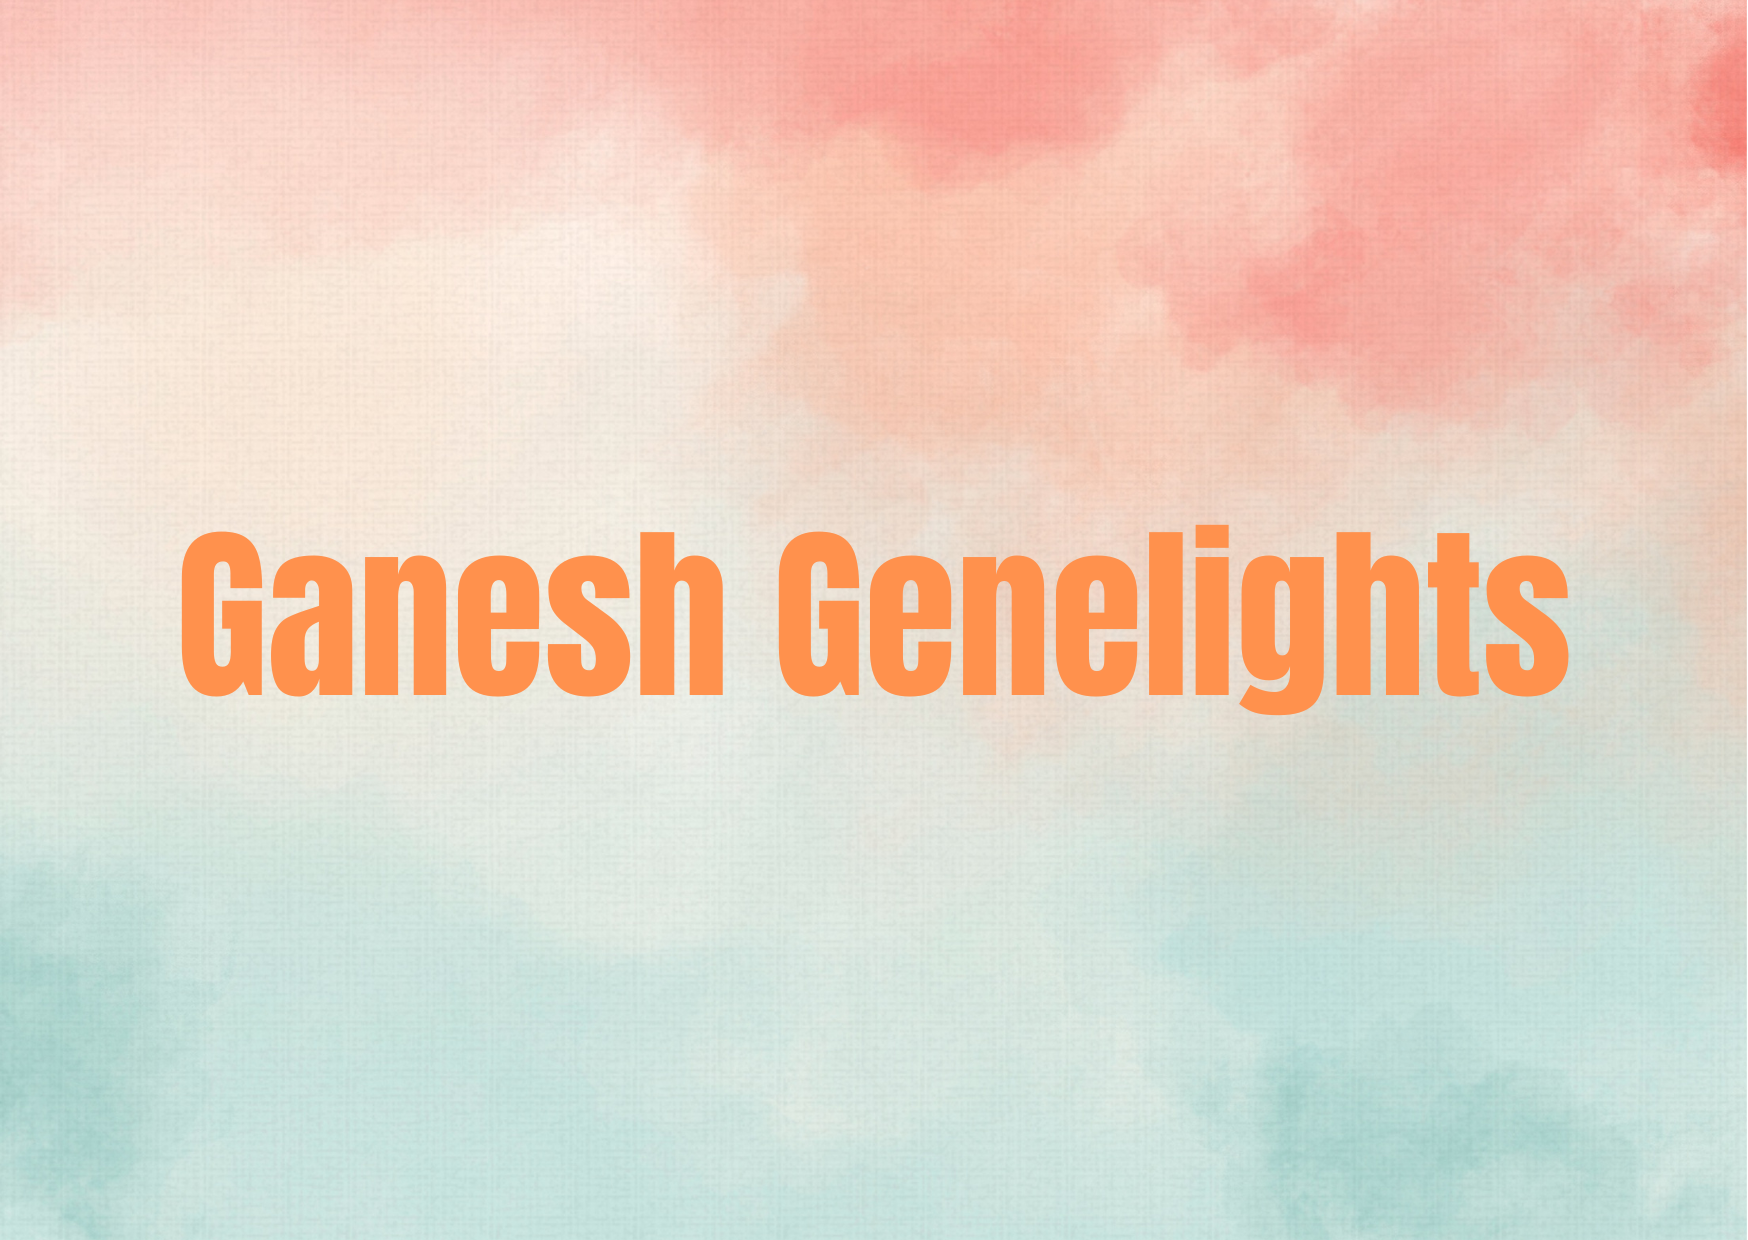 Ganesh Genelights,   